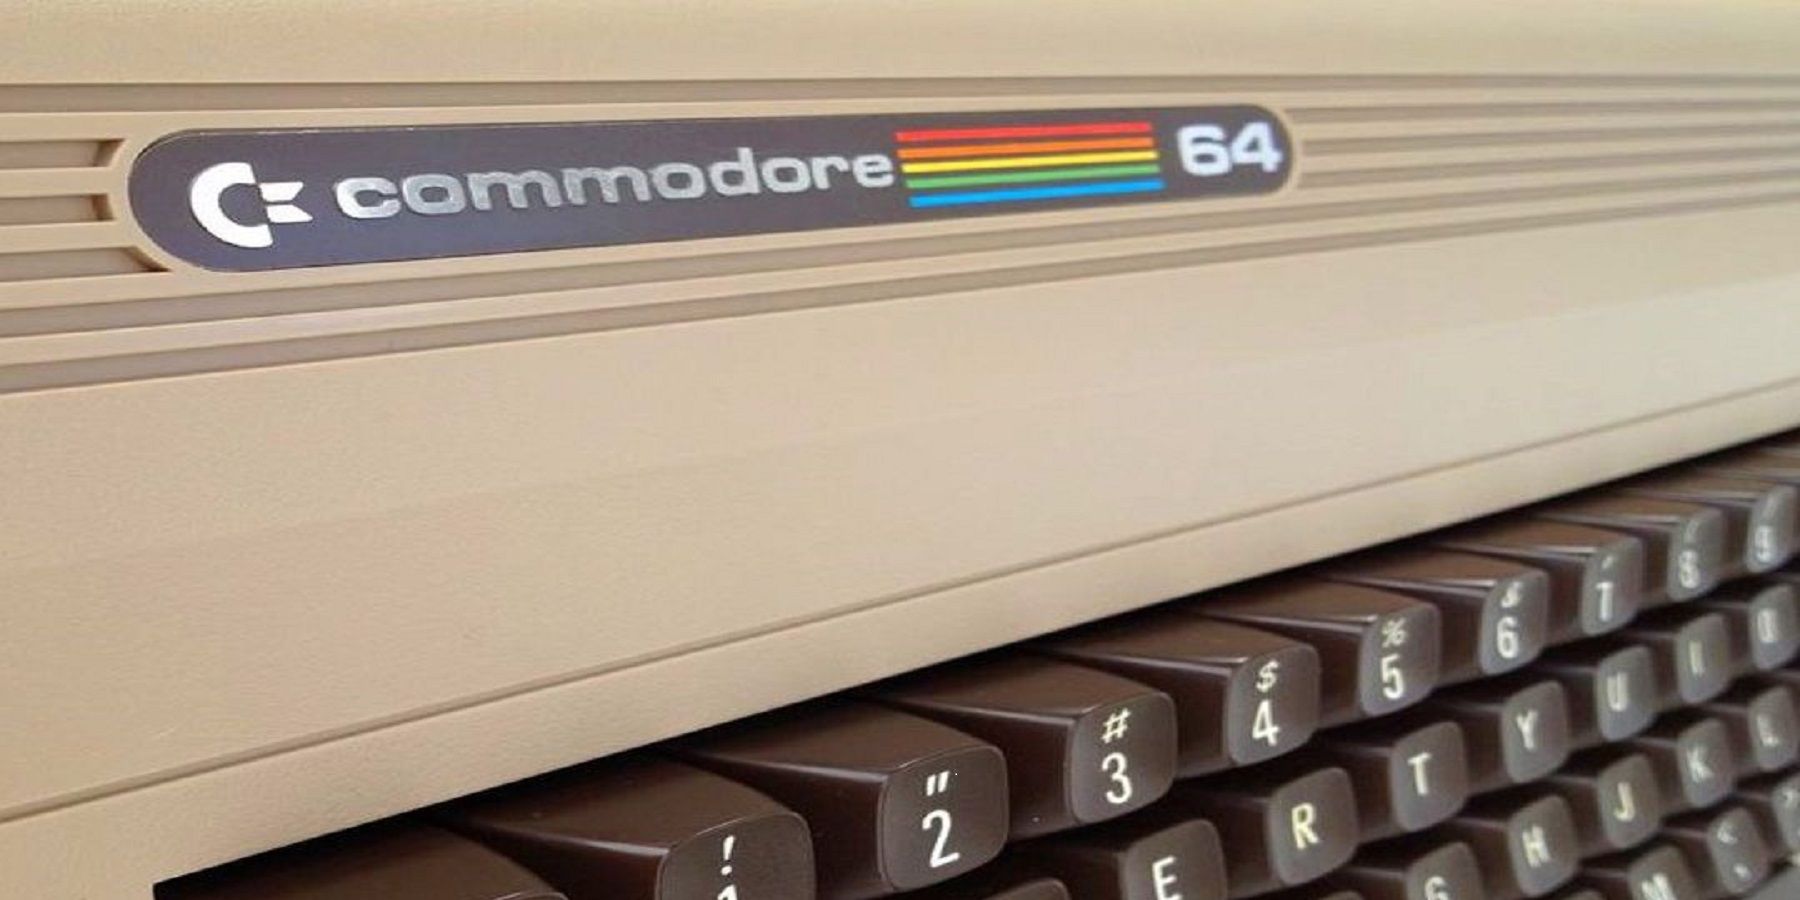 Commodore 64 Keyboard zoom